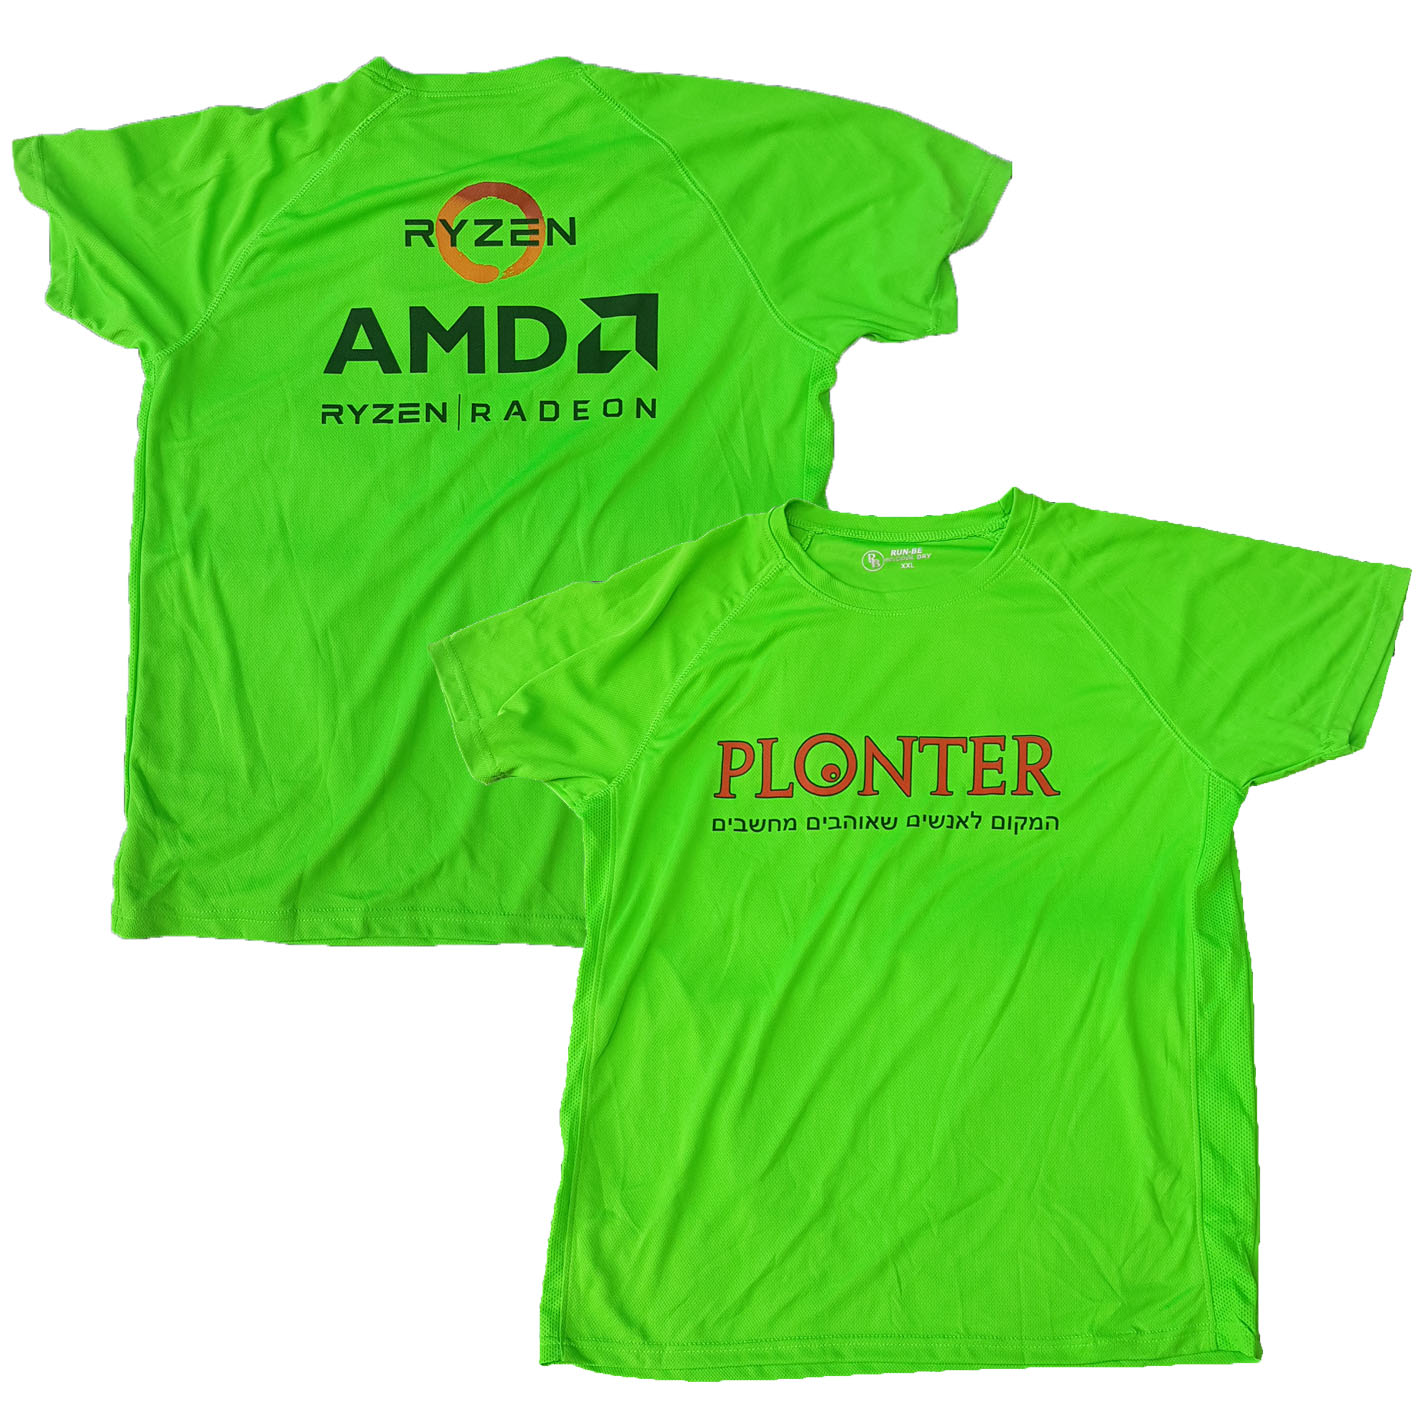 Plonter - Plonter2019-AMD-LTGREEN -   